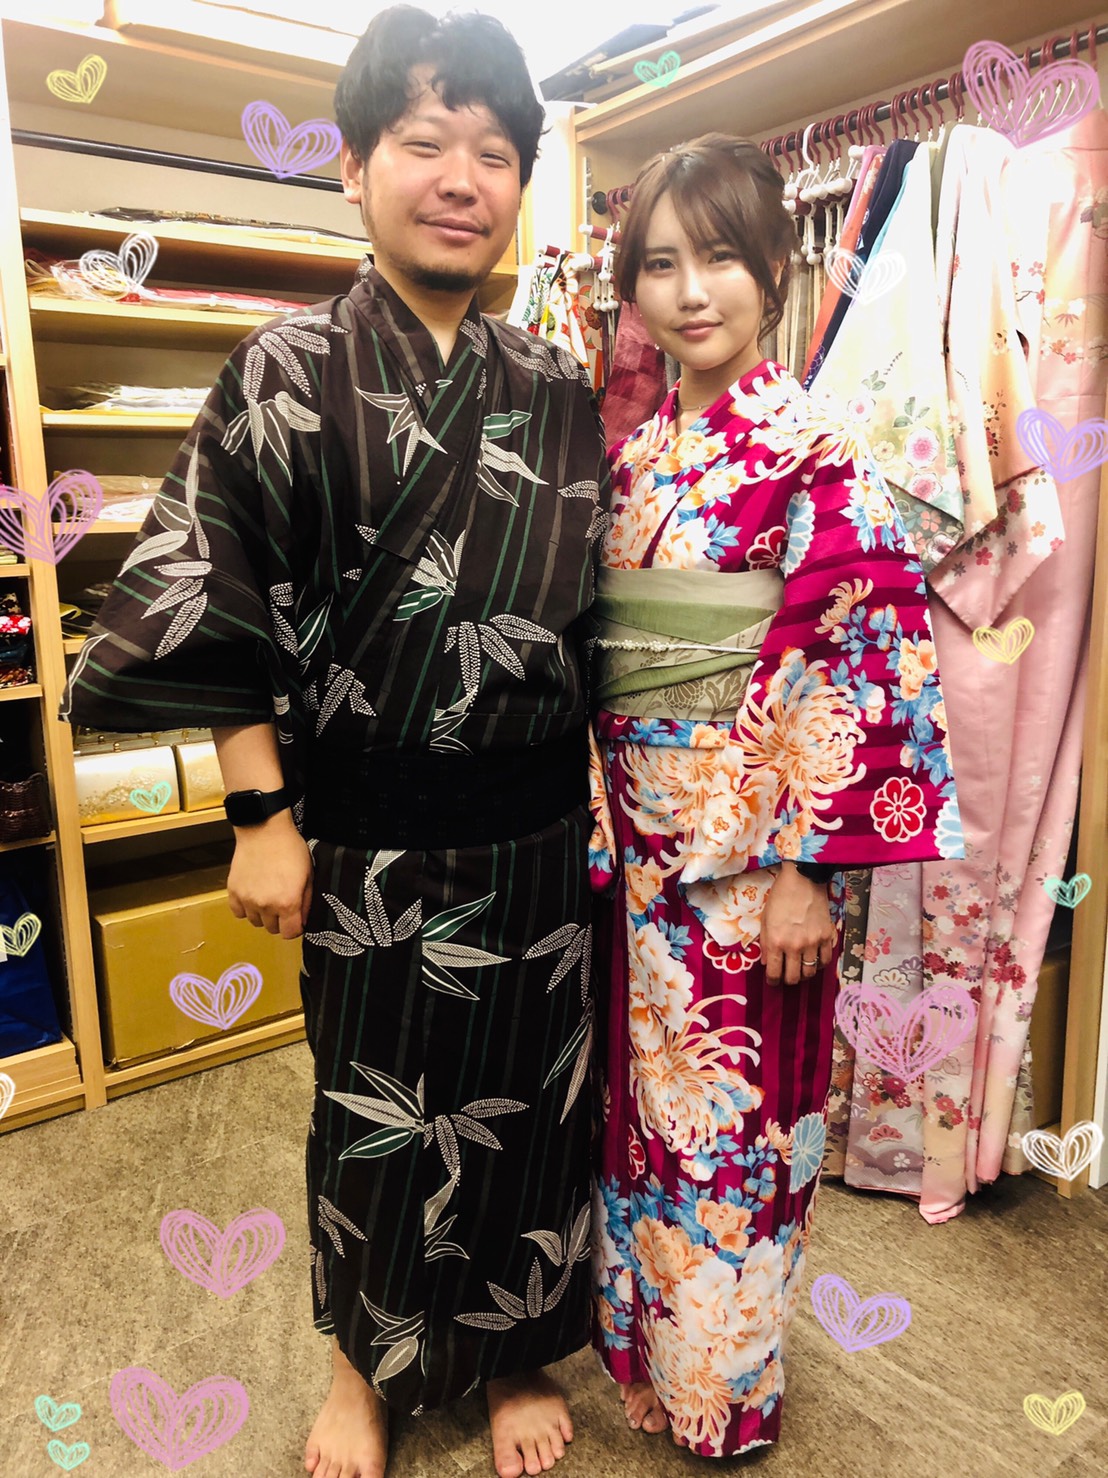 Shop Topics 浴衣デート 浴衣レンタルvasara渋谷店 渋谷で着物 浴衣を楽しむなら 着物レンタルvasara